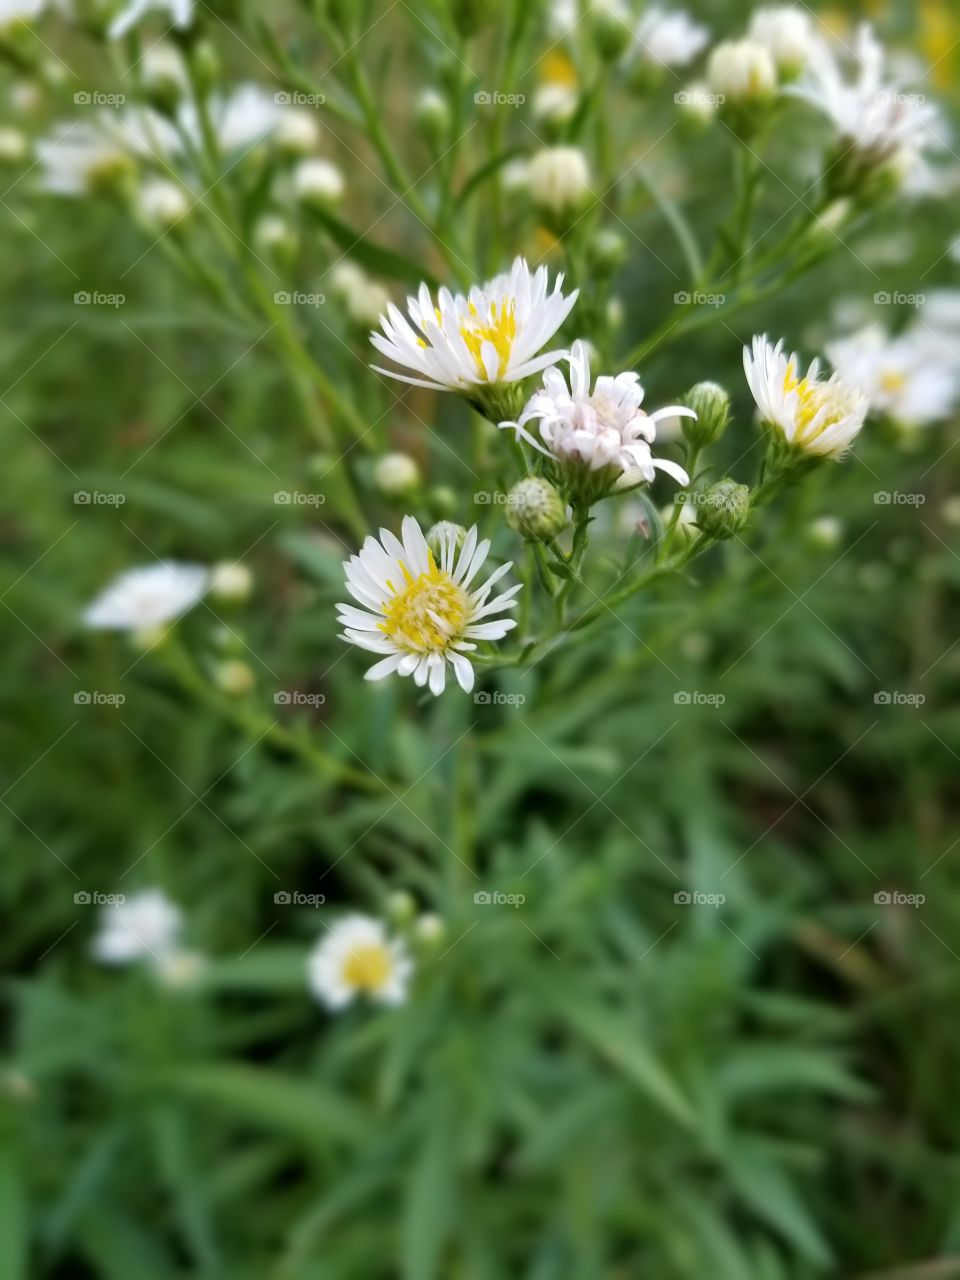 Tiny flower